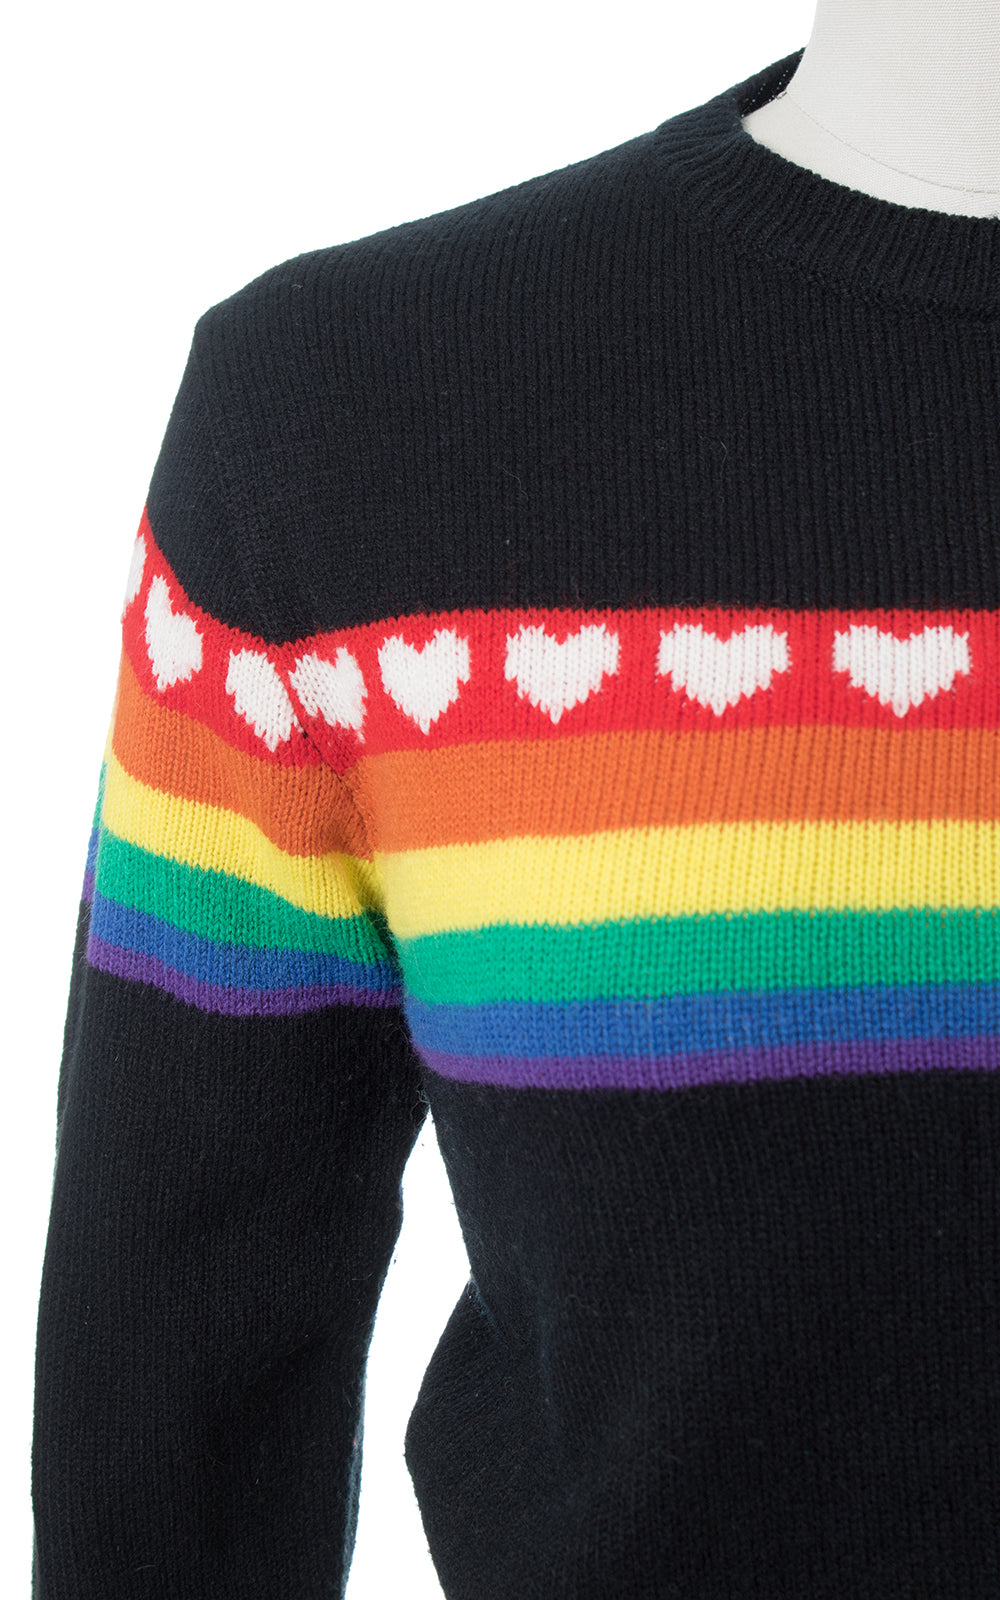 1990s Hearts & Rainbow Novelty Print Knit Sweater Top